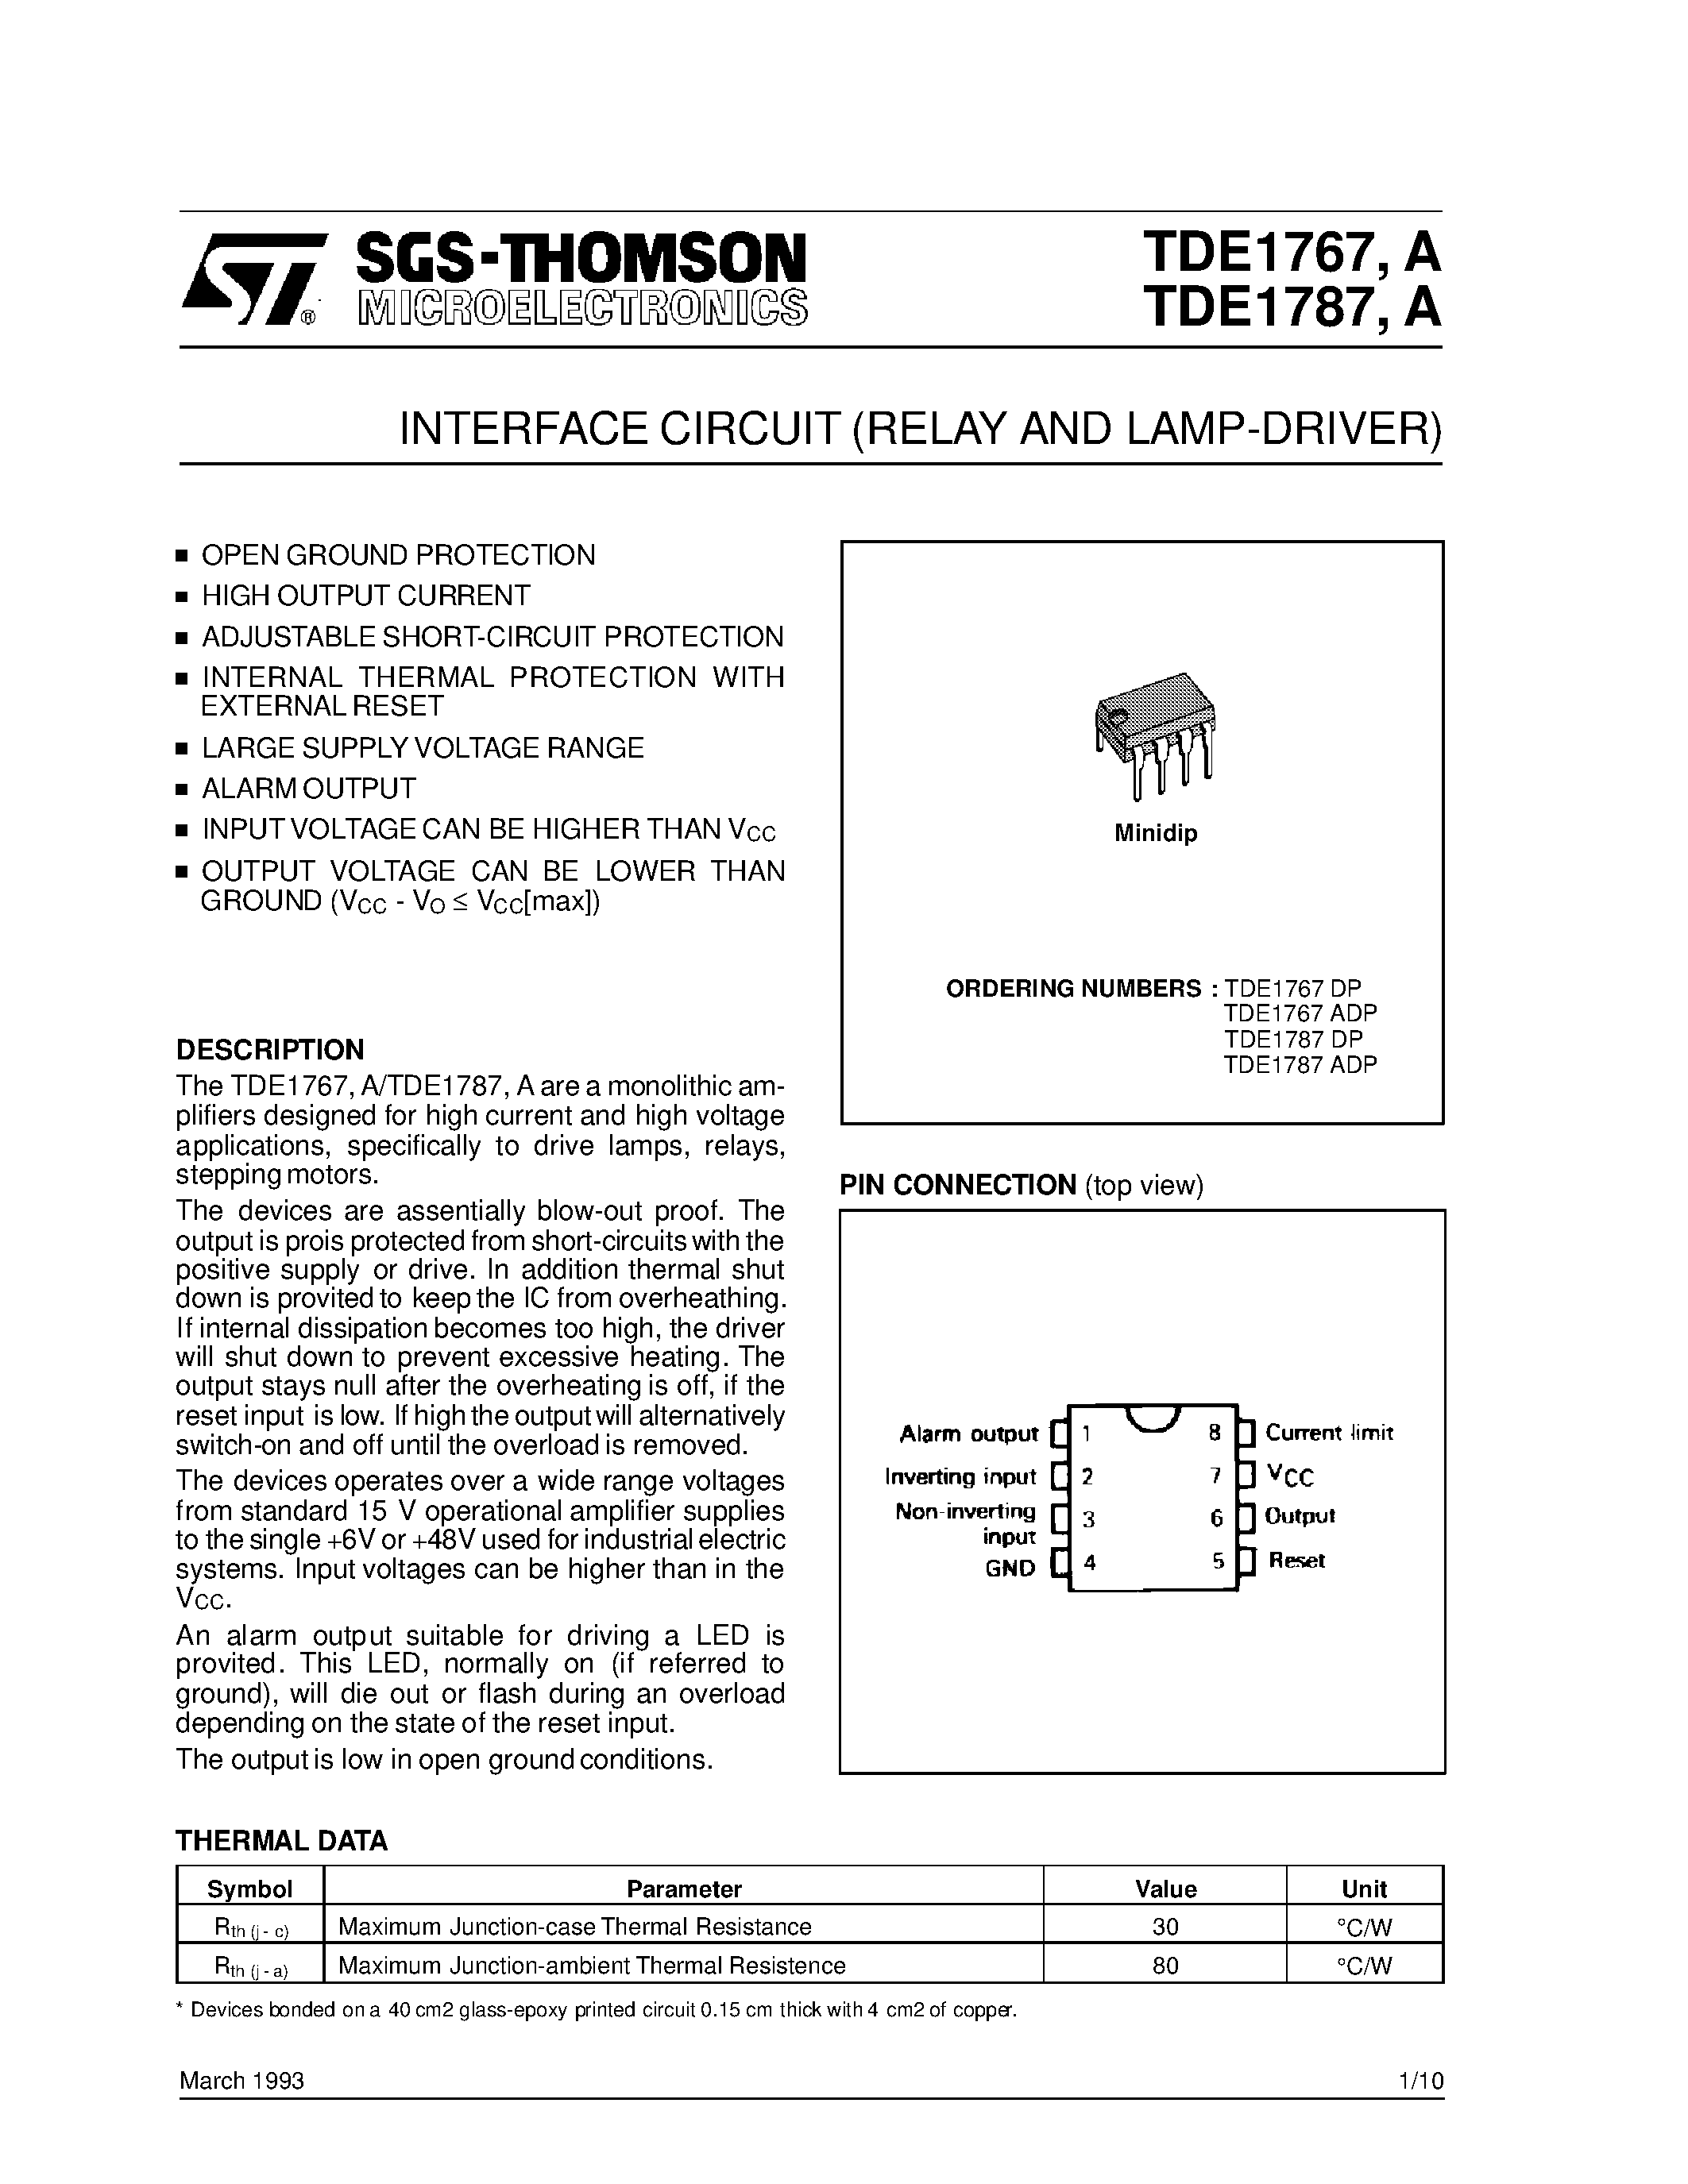 Datasheet TDE1787ADP - INTERFACE CIRCUIT RELAY AND LAMP-DRIVER page 1